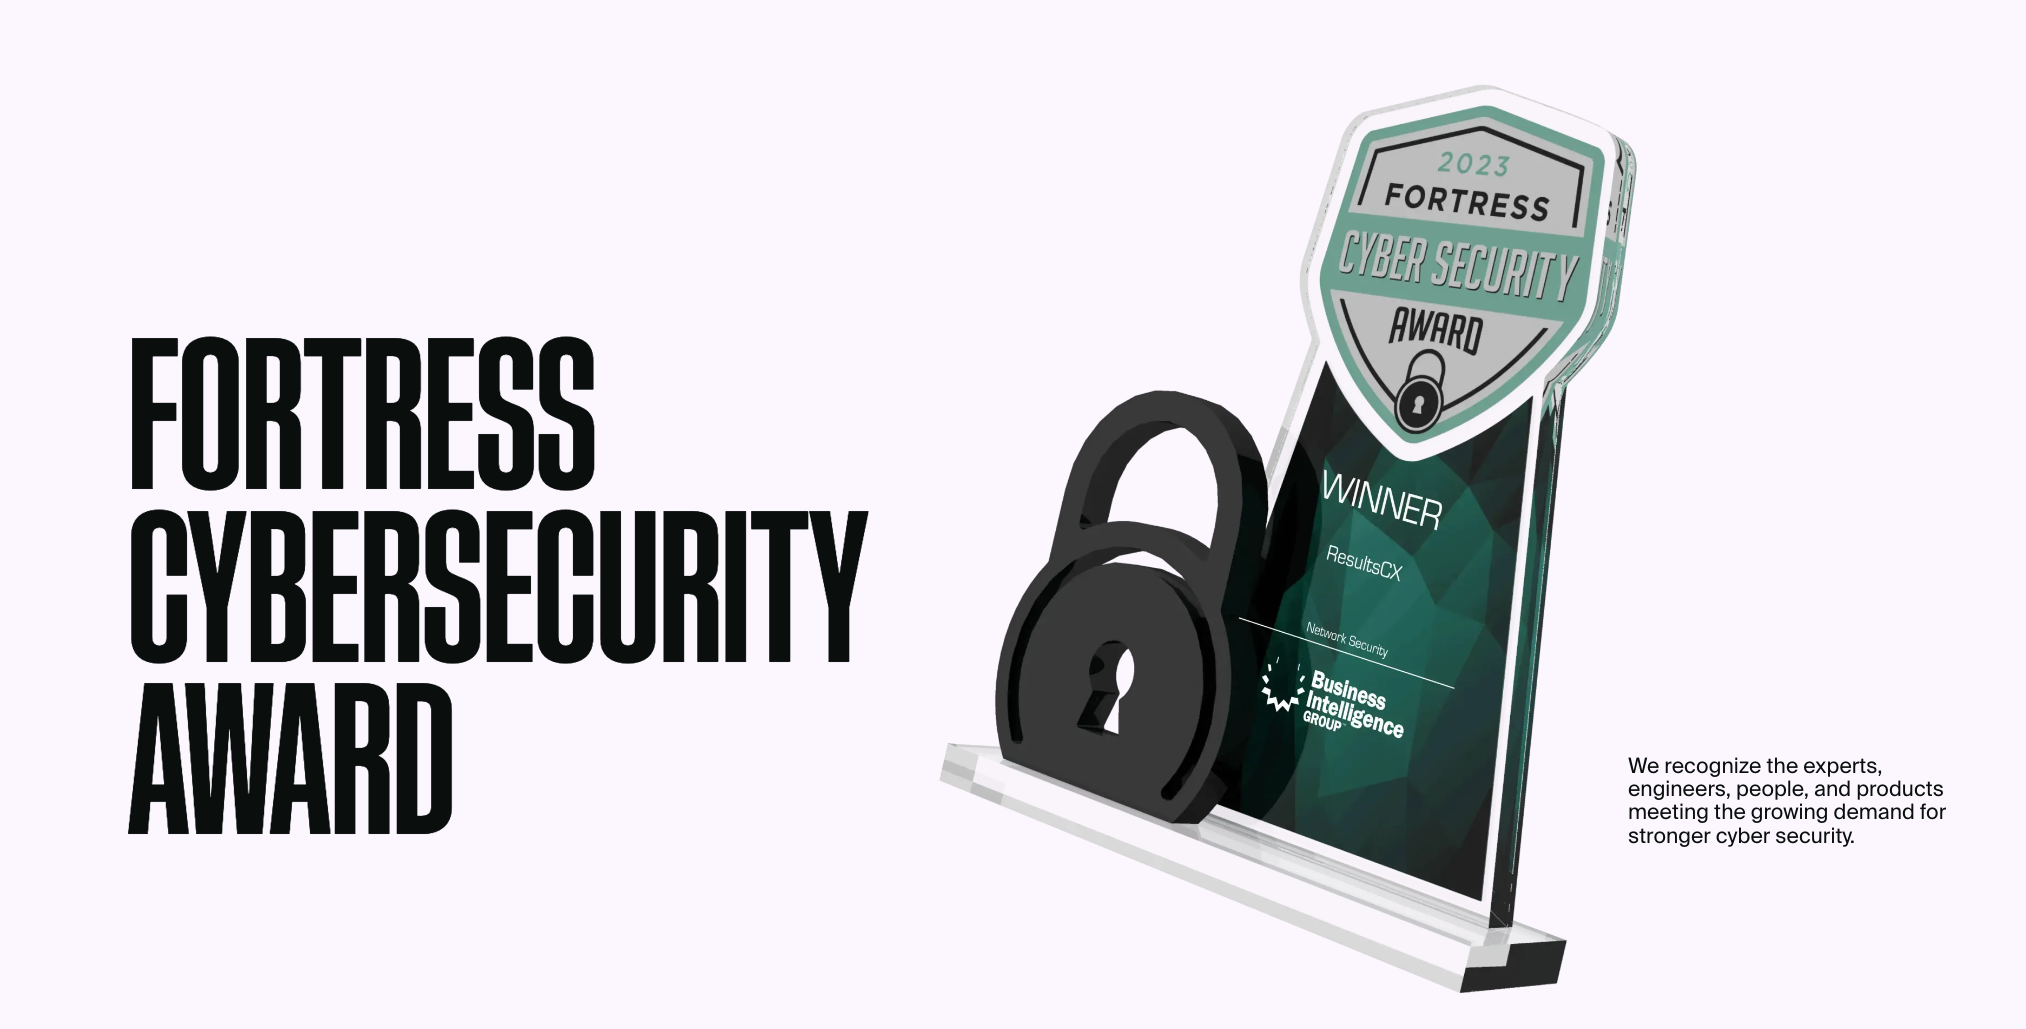 Fortress cybersecurity award 2023